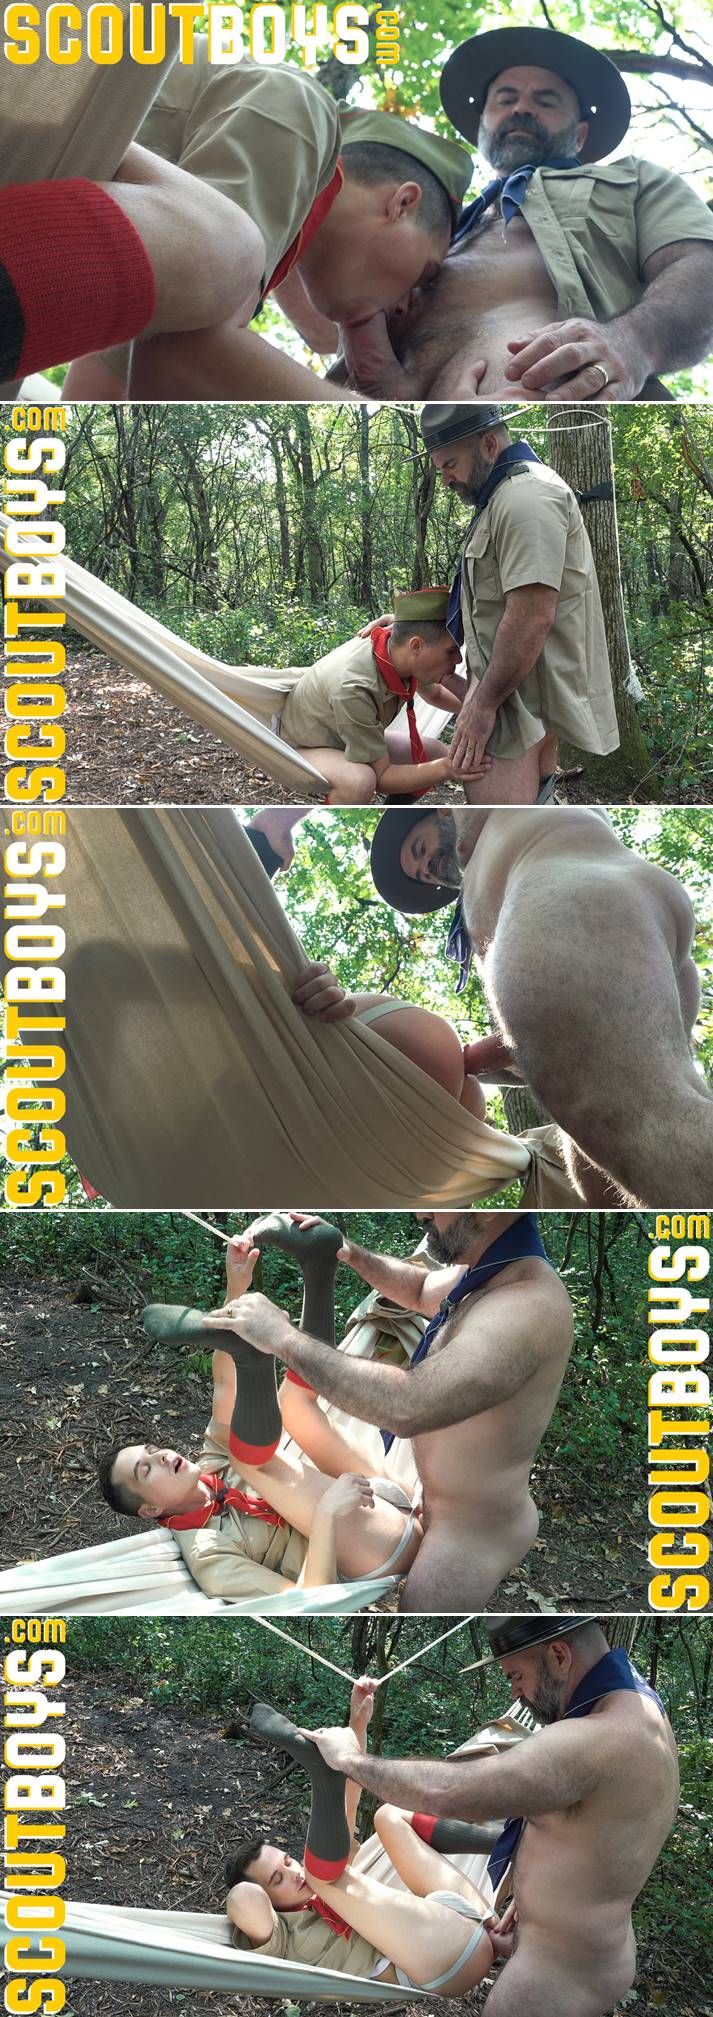 ScoutBoys: Outdoor Adventuring - Mark Winters & Bishop Angus 1